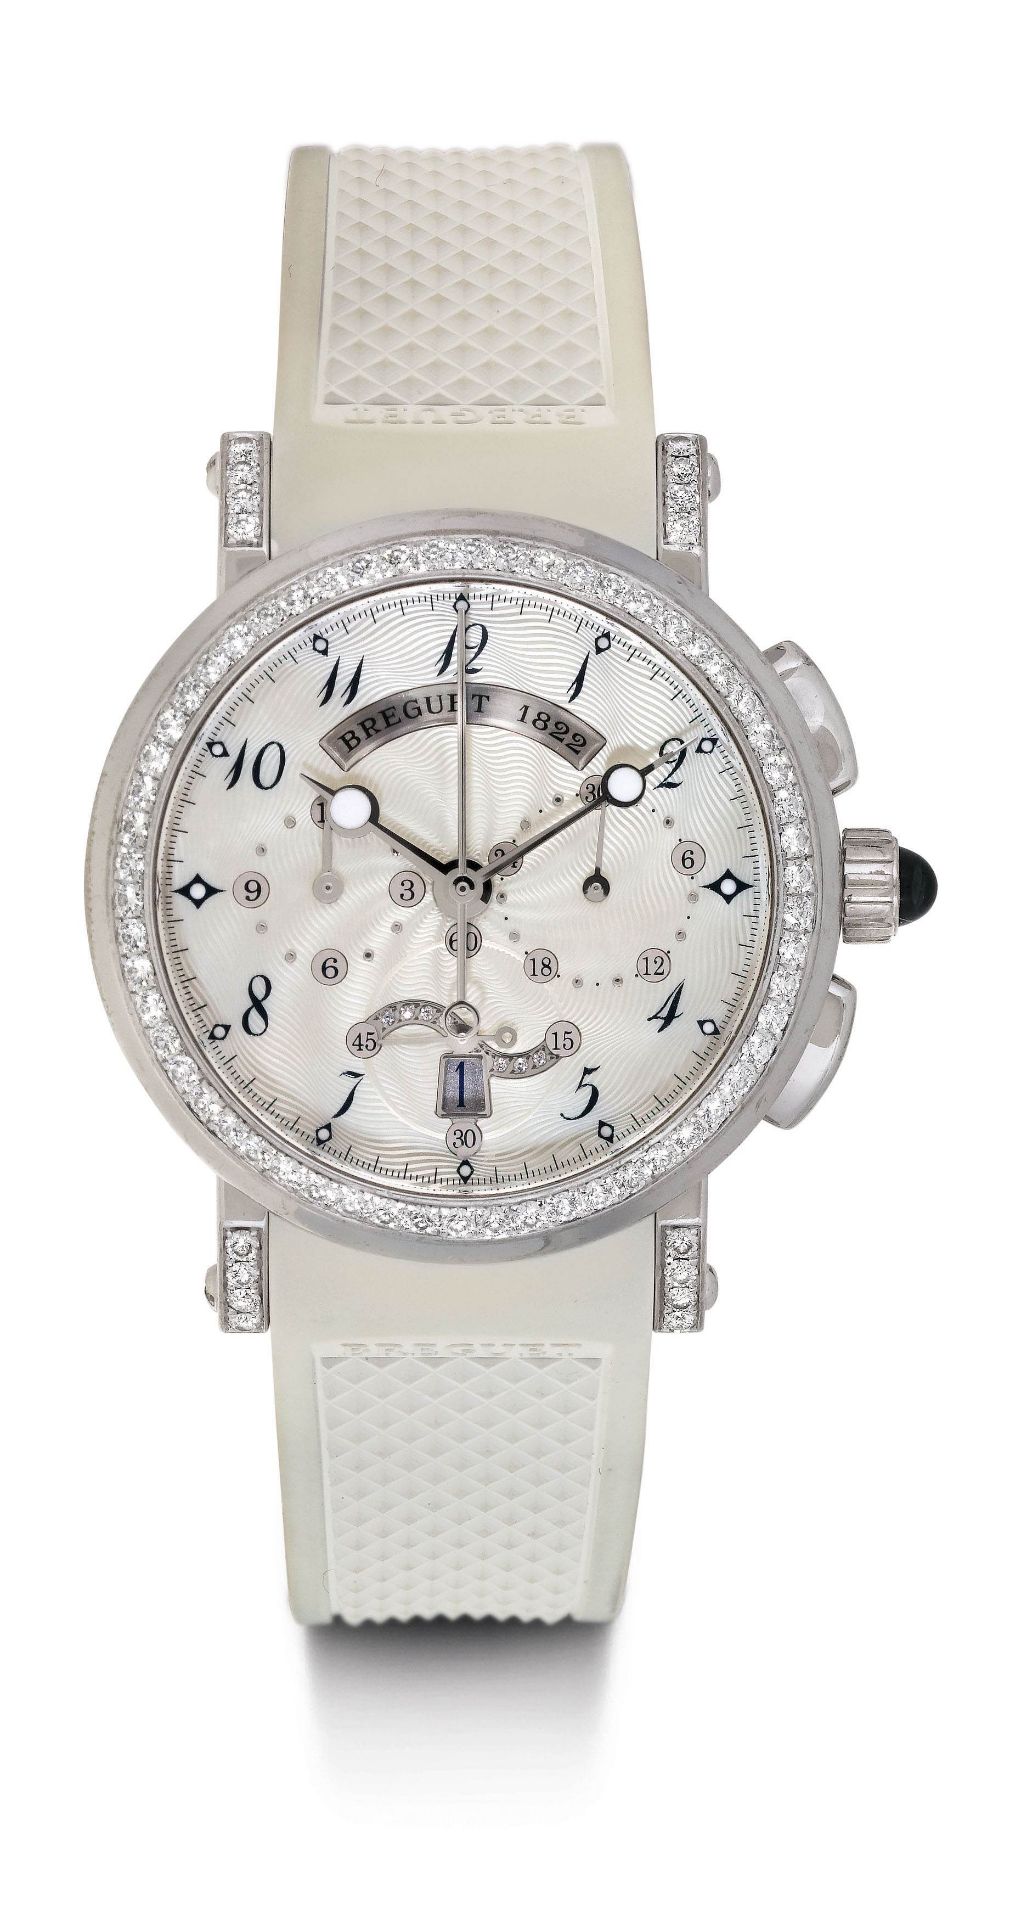 Breguet, "Marine Chronograph" set with diamonds, 2012.